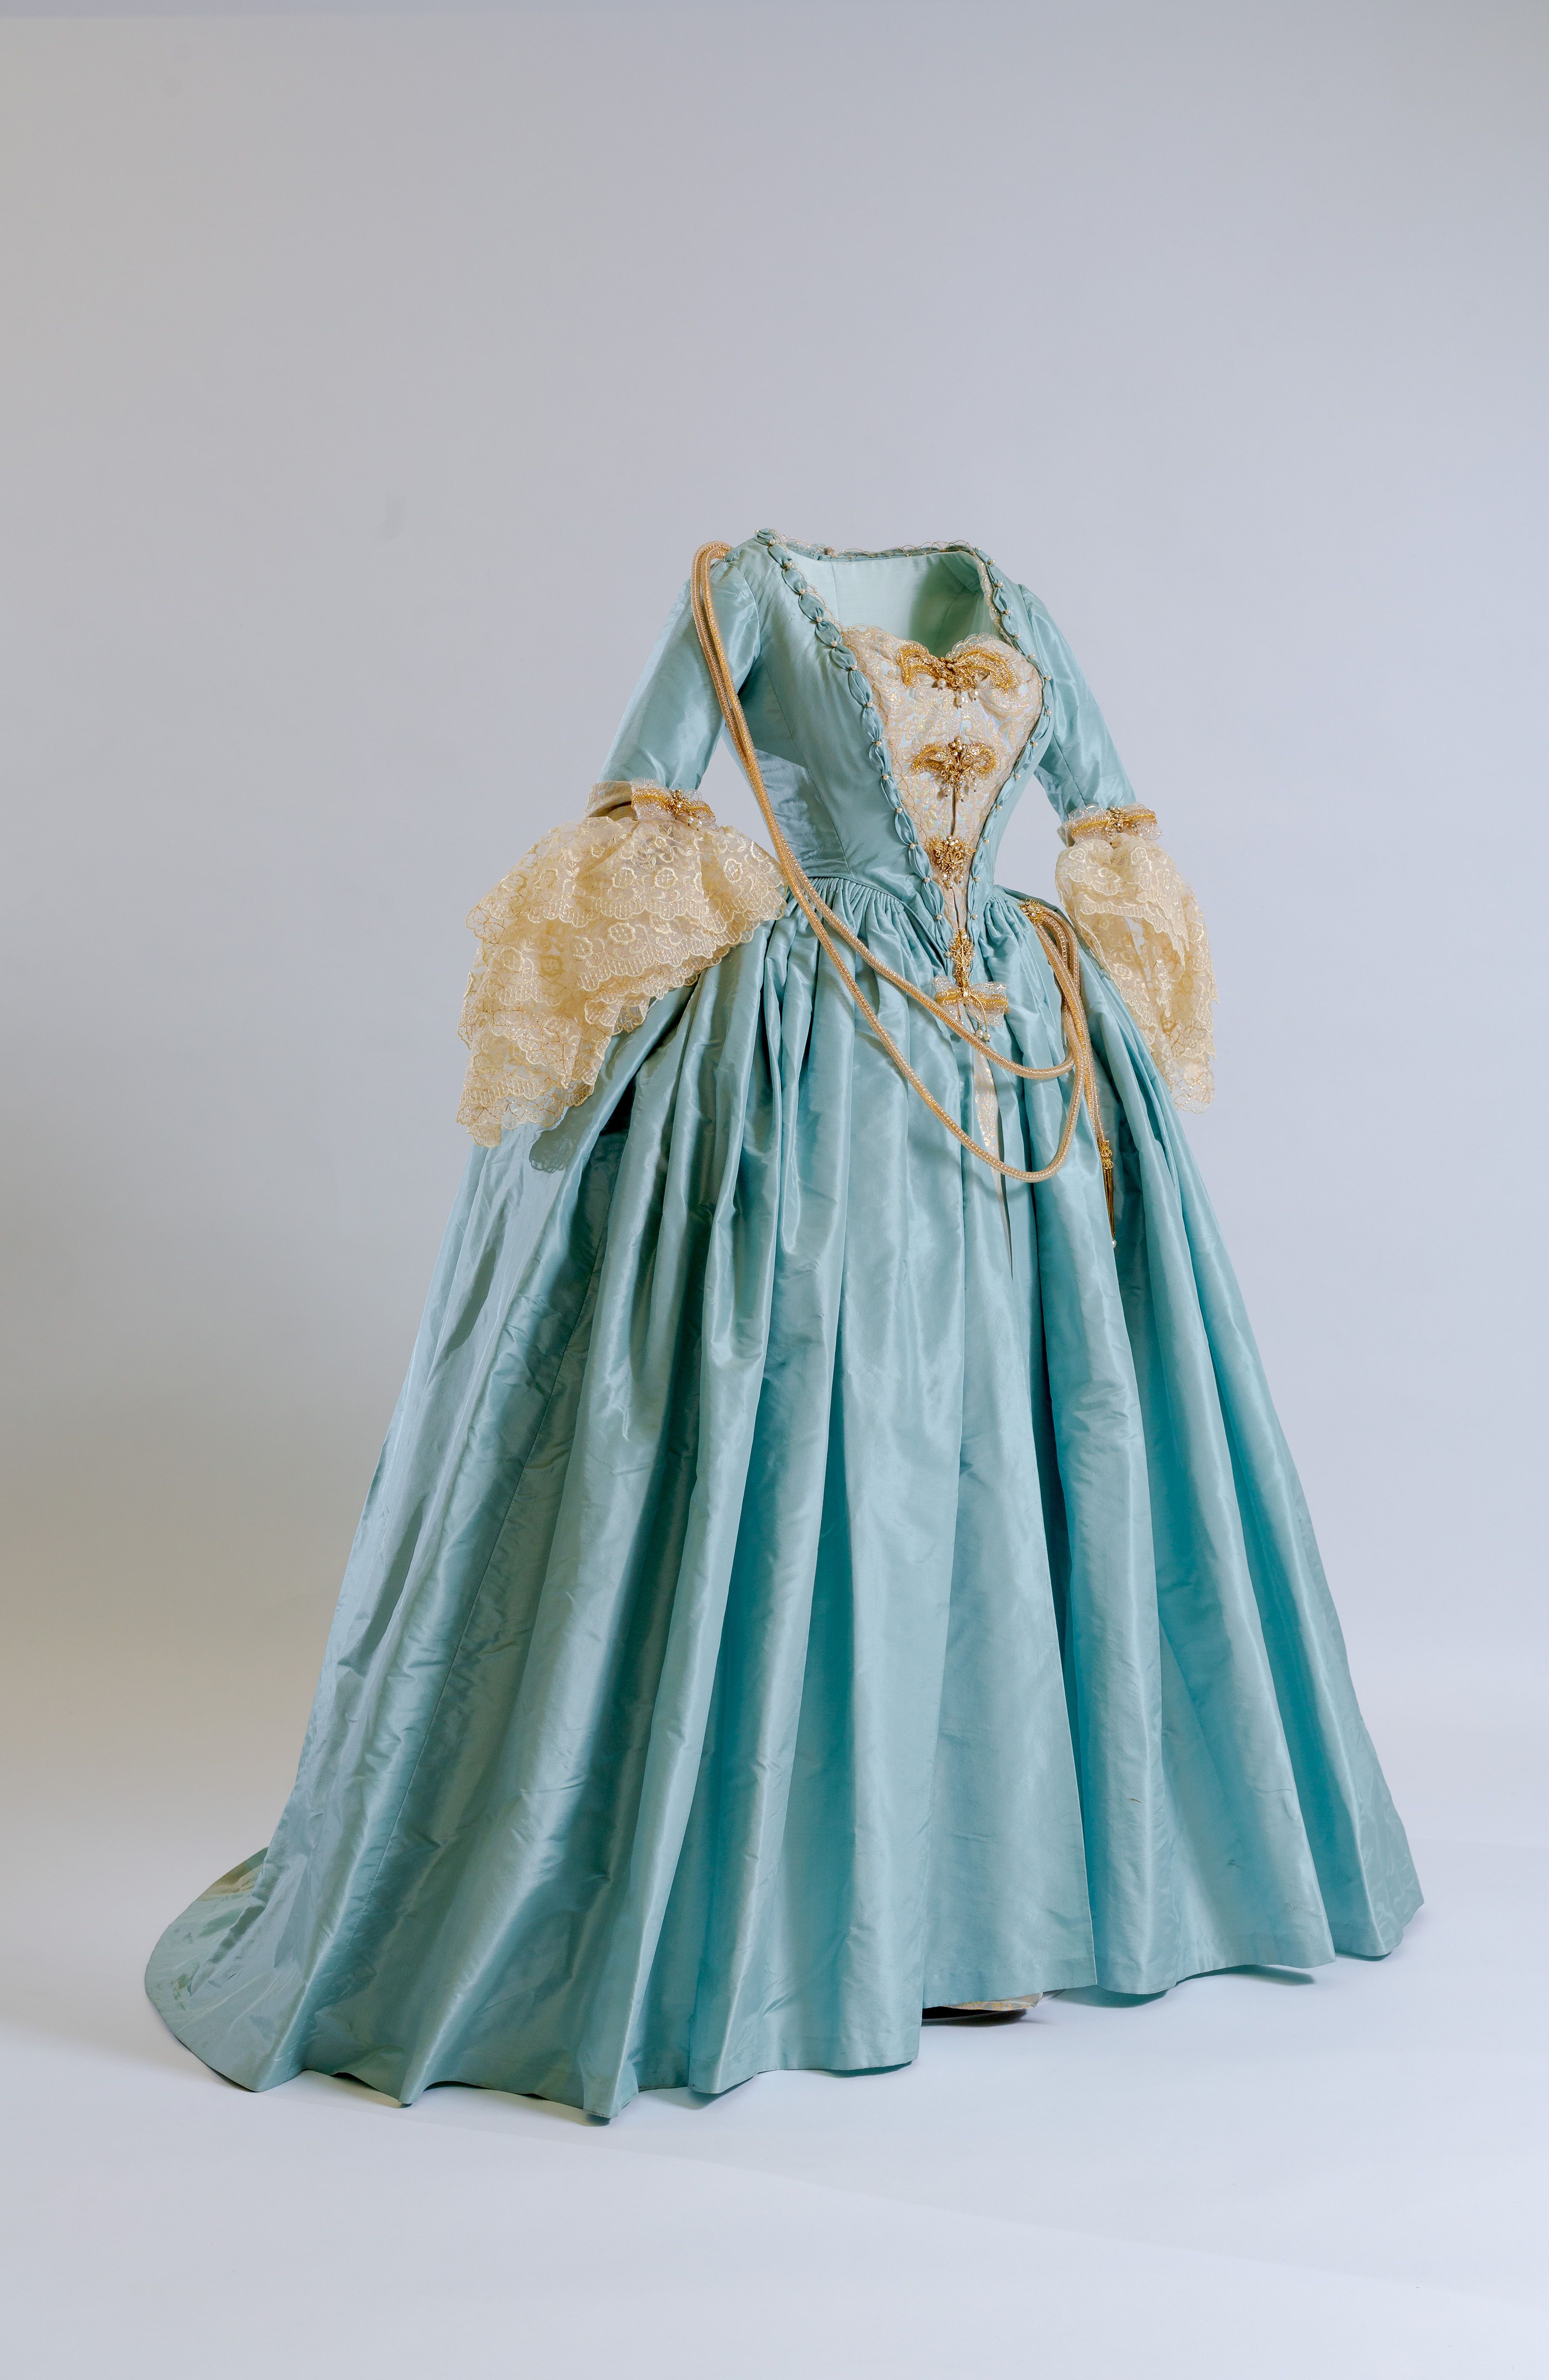 18th century royal dress,royal dress,